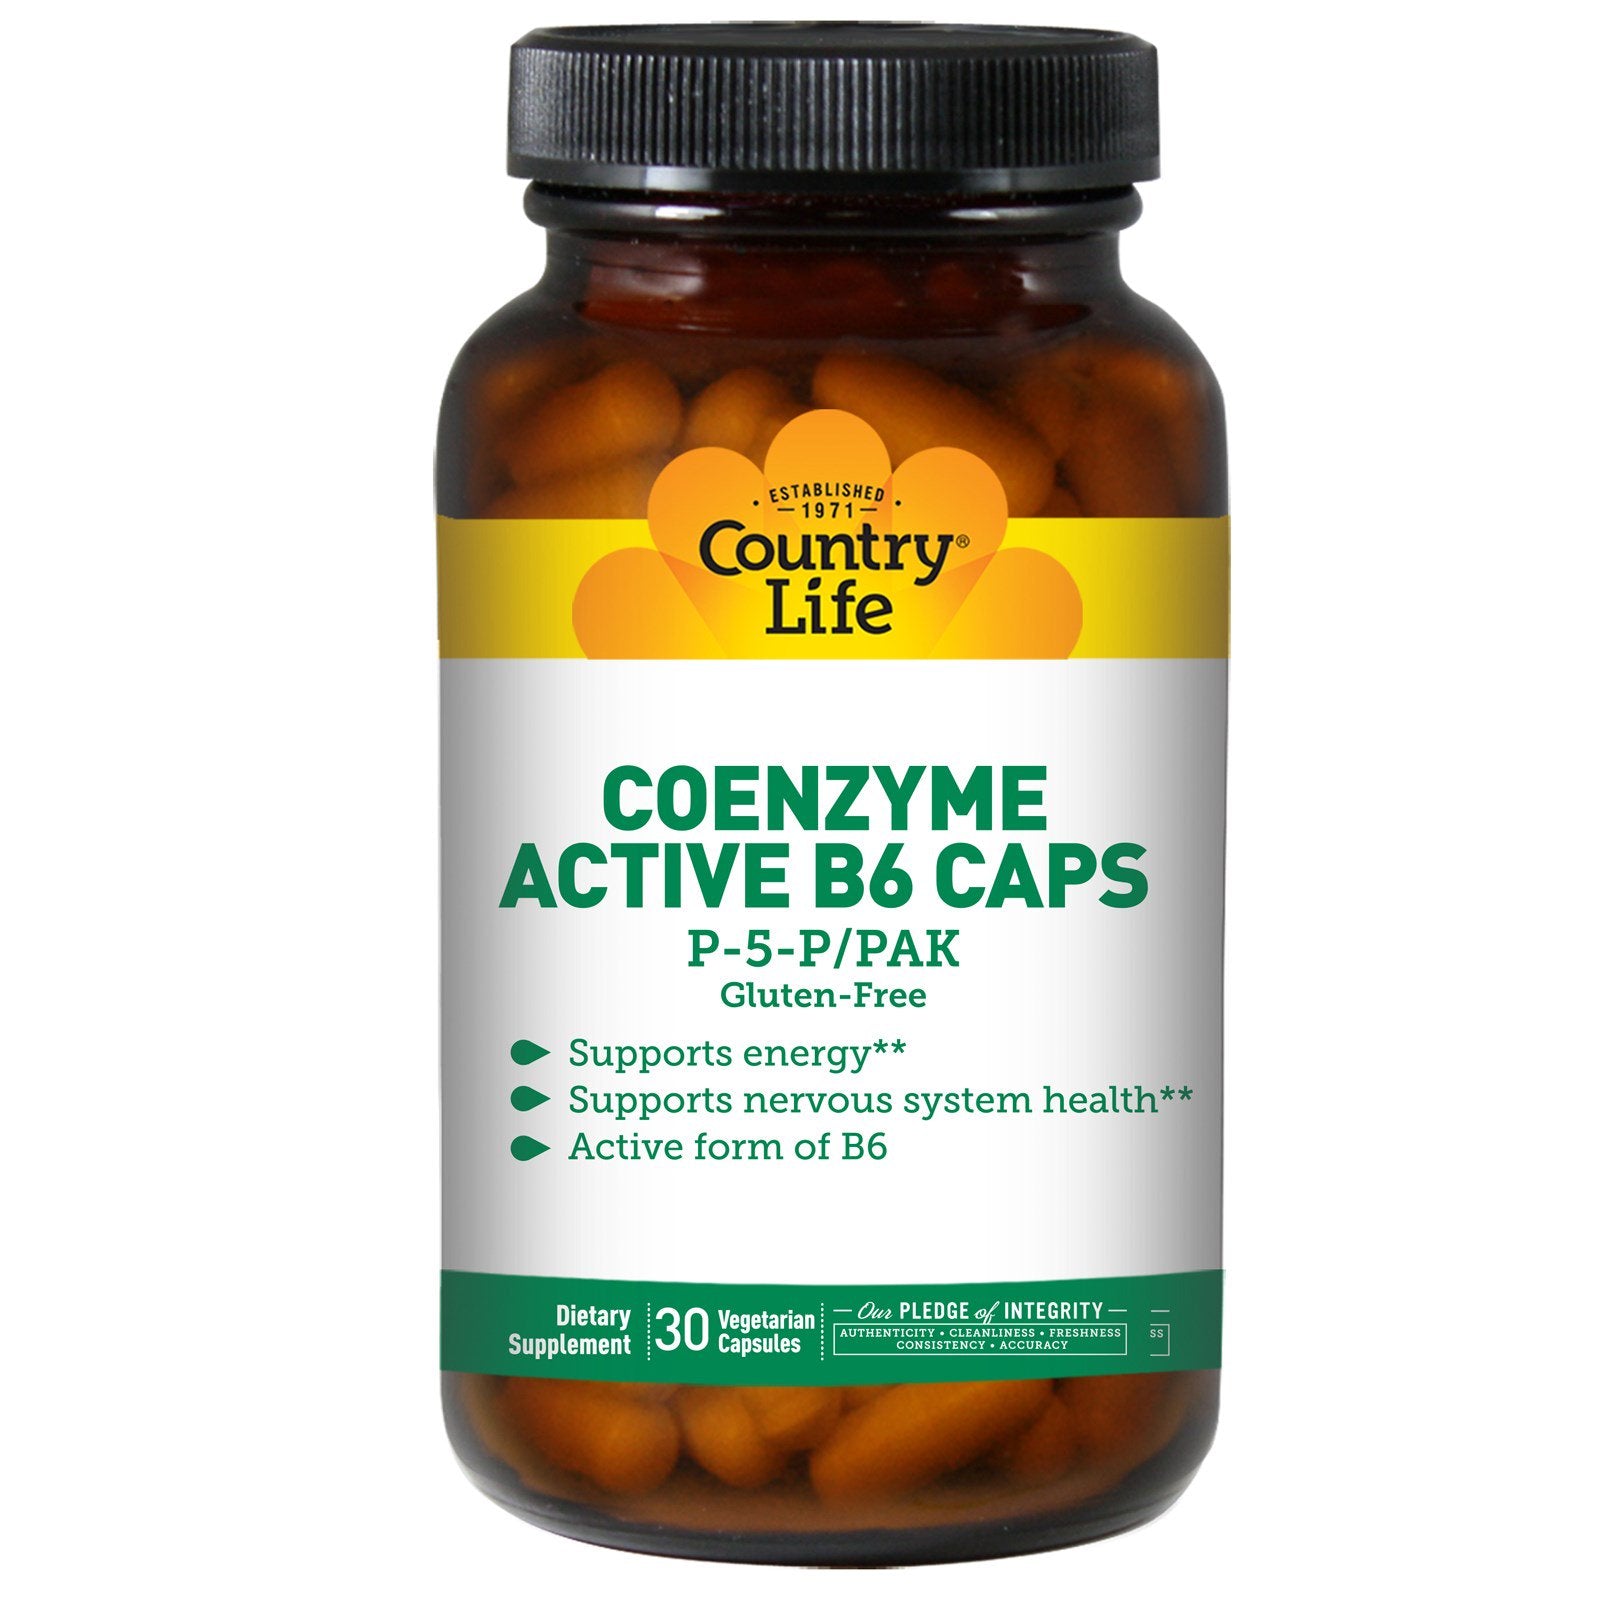 Country Life, Coenzyme Active B6 Caps, P-5-P/PAK, 30 Vegetarian Capsules